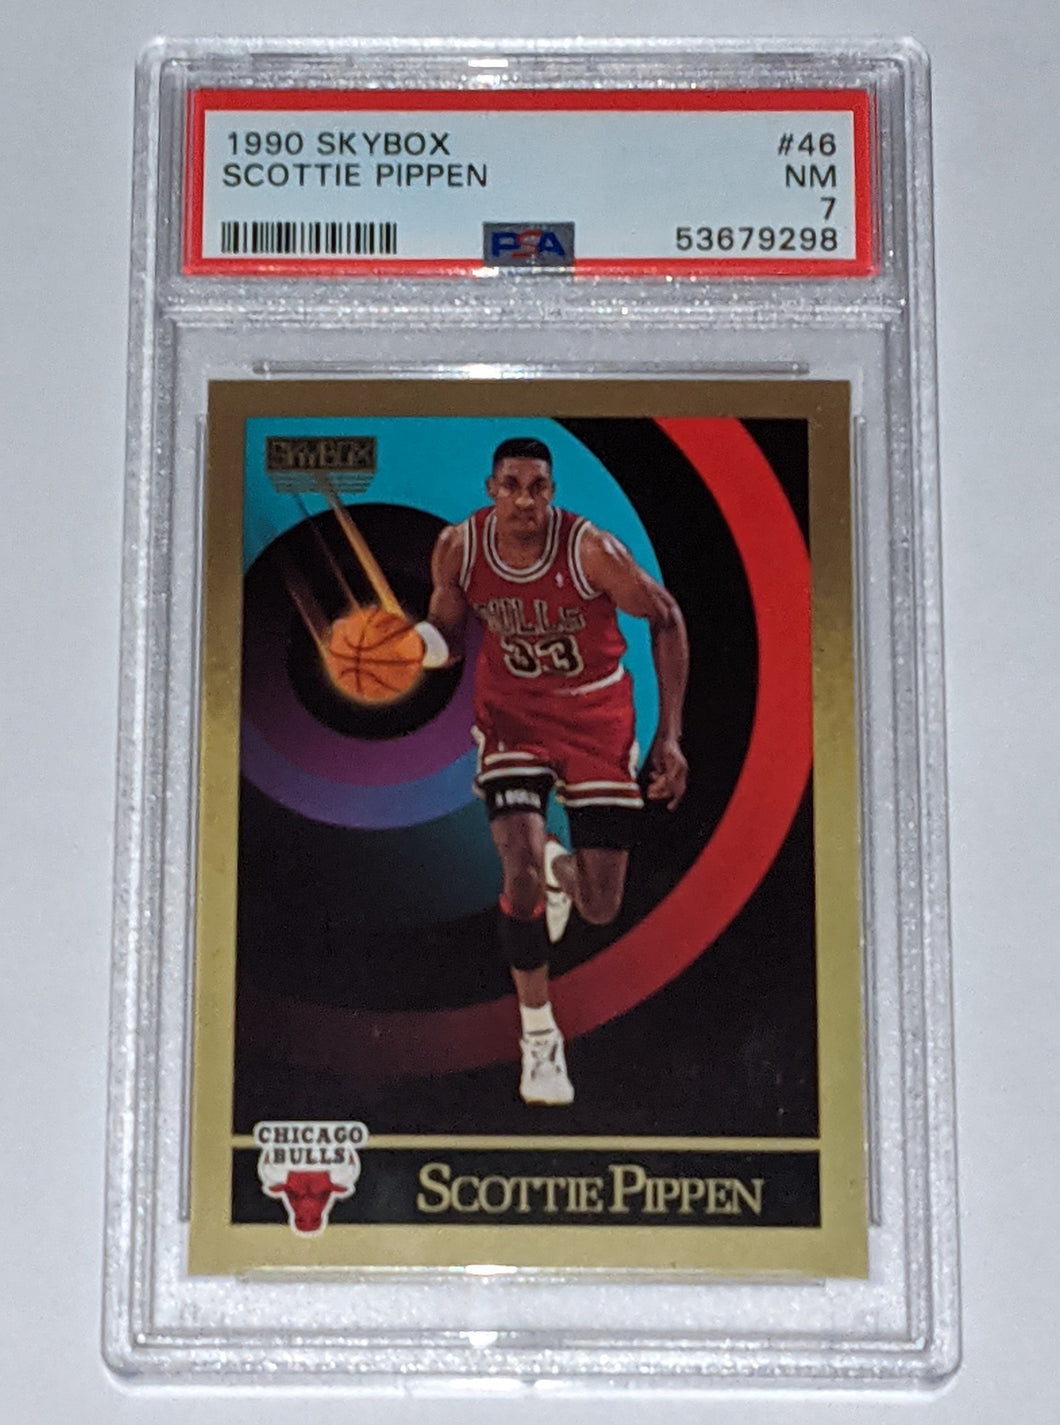 1990 Skybox Scottie Pippen Card #46